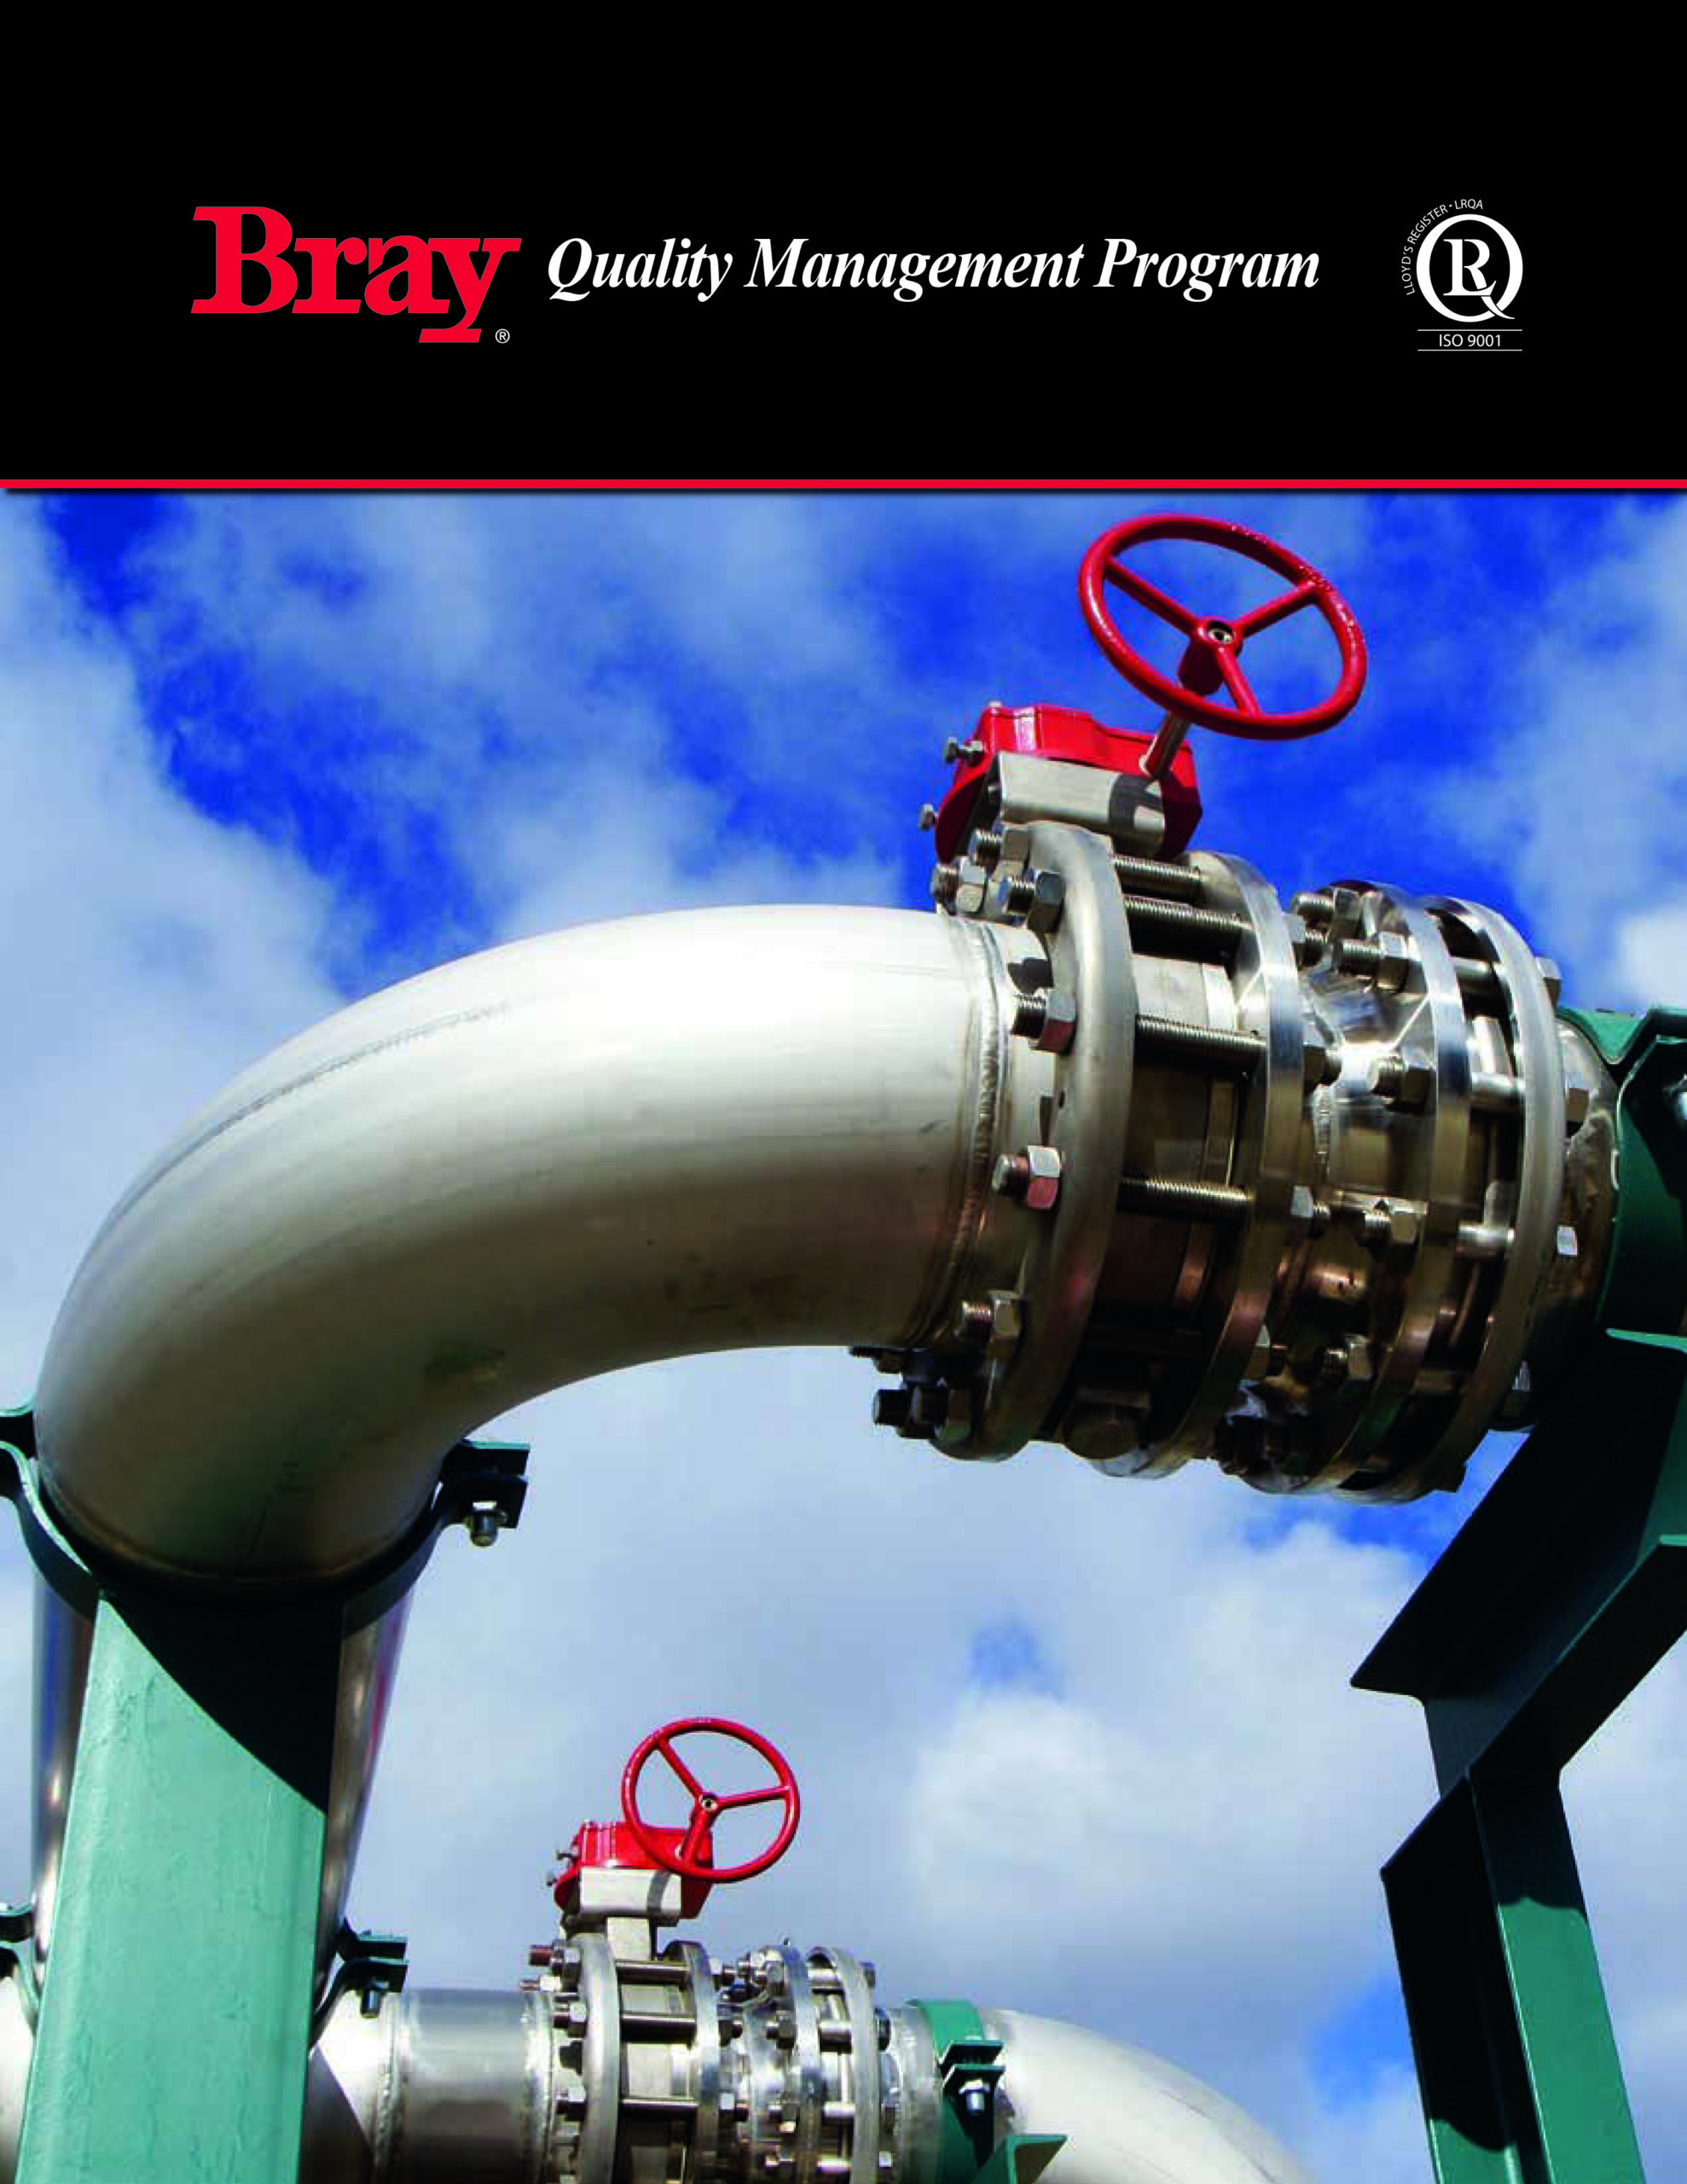 Bray Quality Management Program